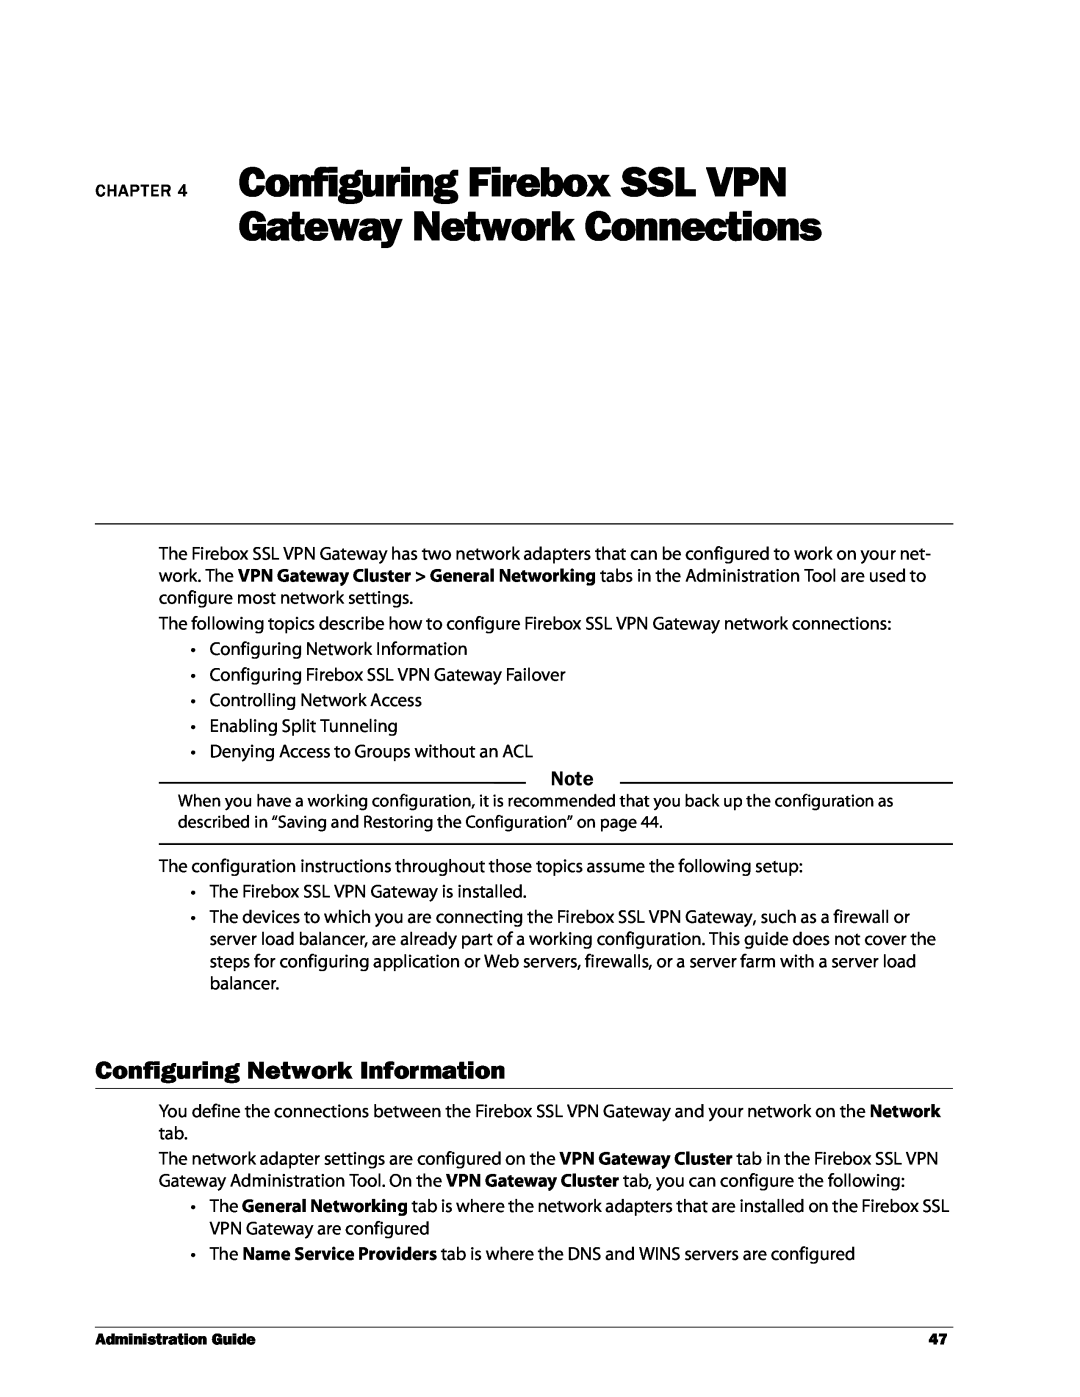 WatchGuard Technologies manual Configuring Firebox SSL VPN, Gateway Network Connections, Configuring Network Information 